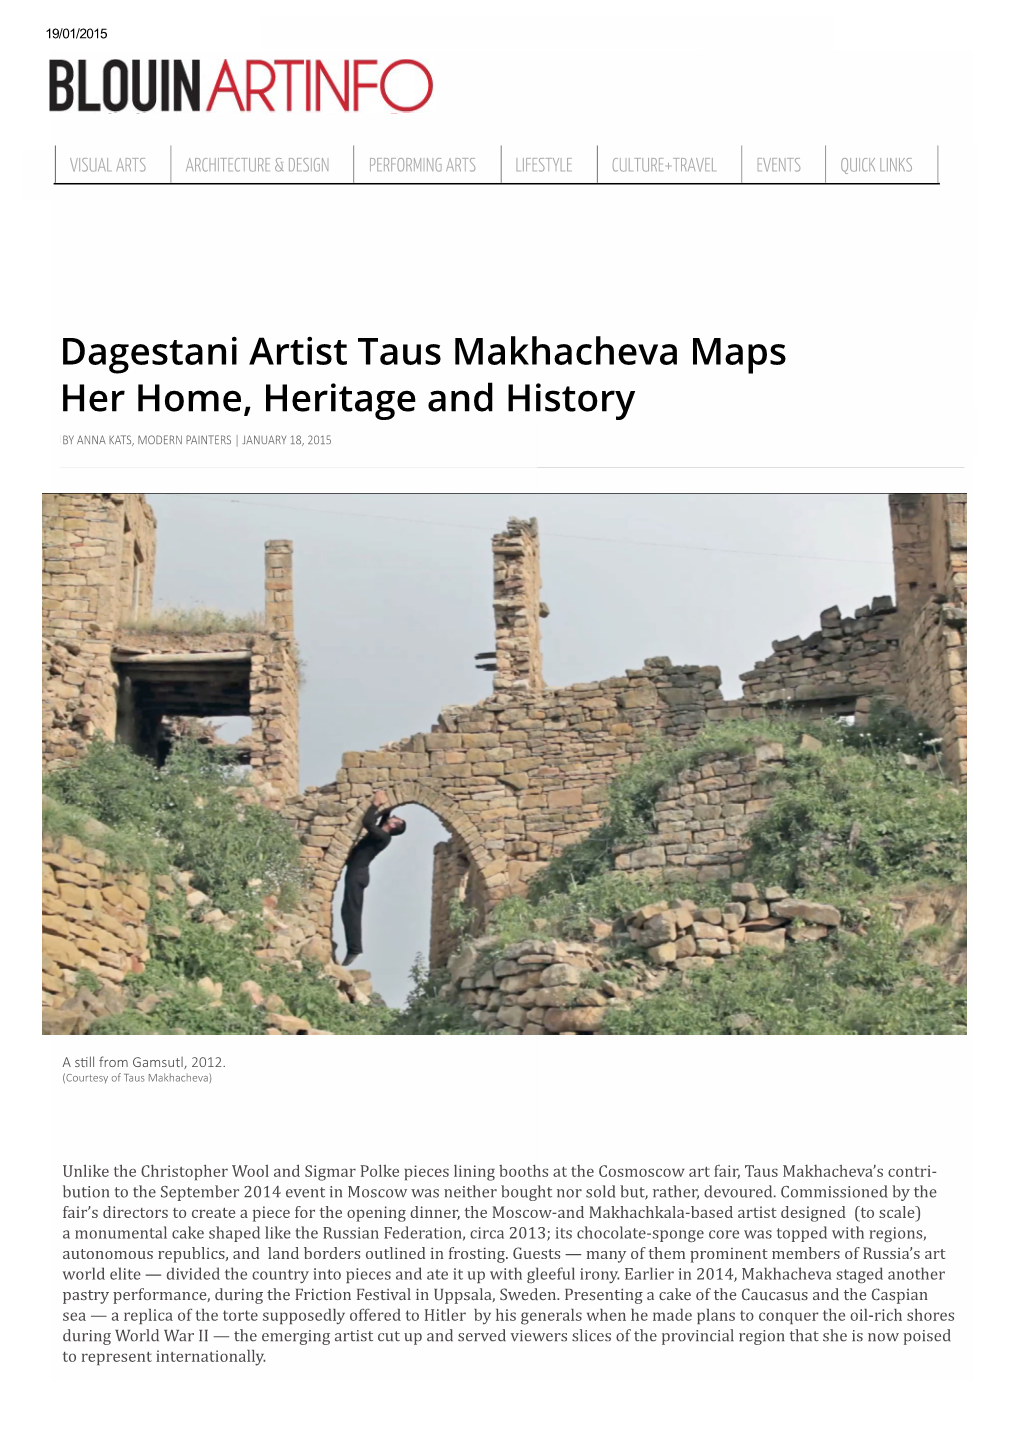 Dagestani Artist Taus Makhacheva Maps Her Home, Heritage and History | BLOUIN ARTINFO